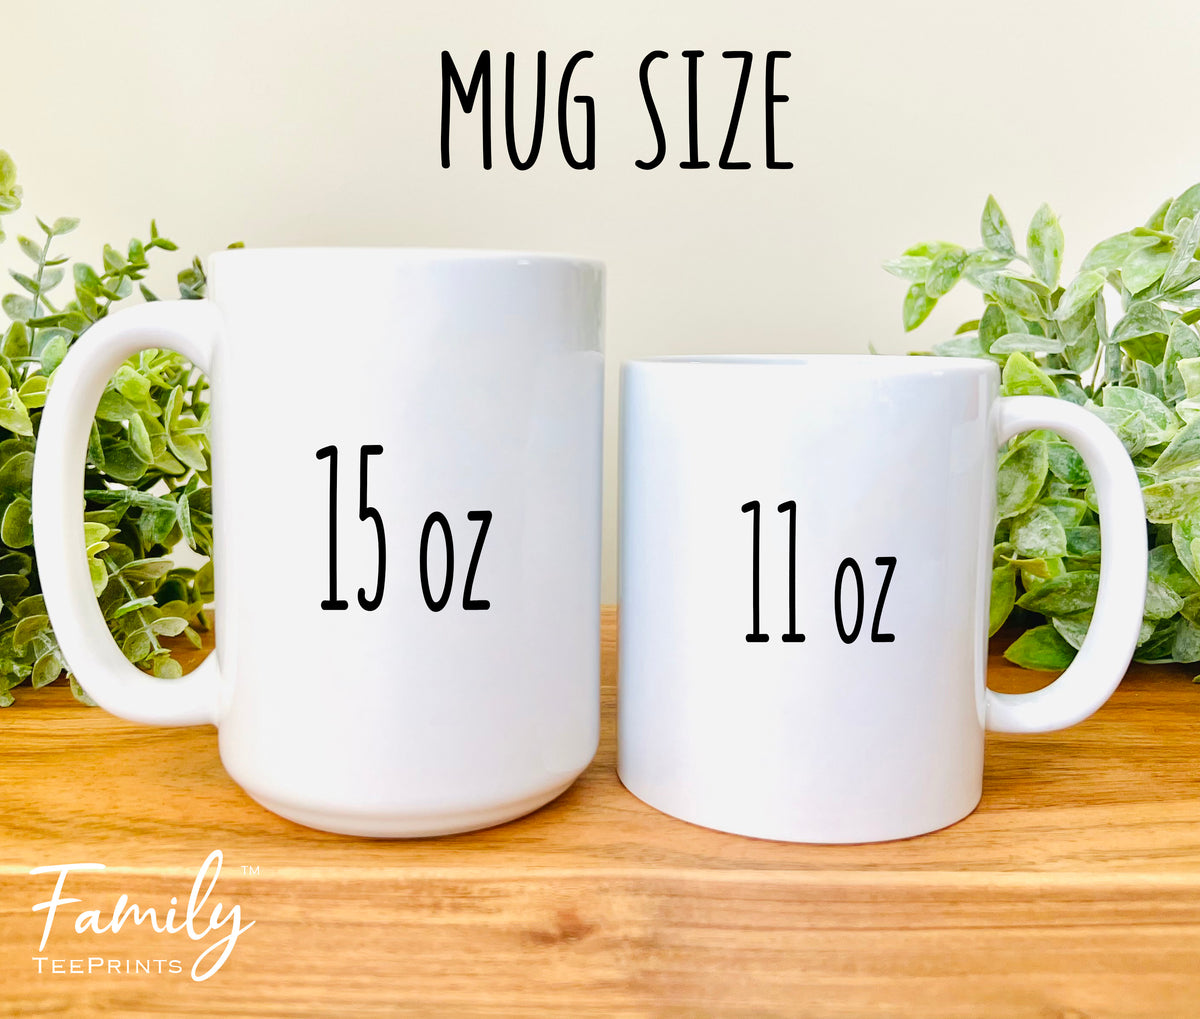 Always Be Yourself Unless You Can Be A Fox - Coffee Mug - Fox Gift - Fox Mug - familyteeprints